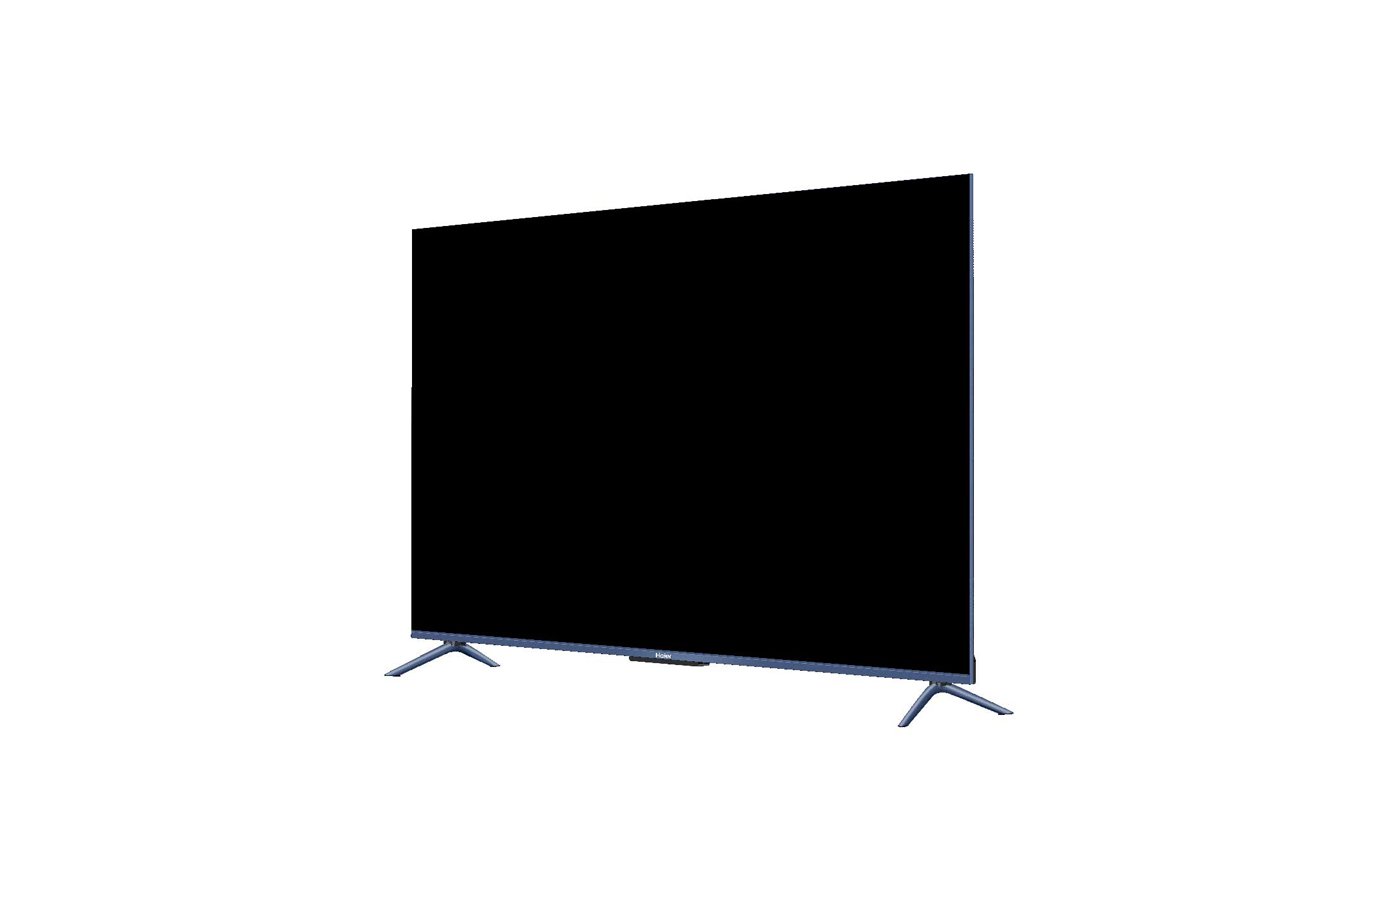 Haier 50 Smart TV AX Pro. Телевизор Haier 50 Smart tvs3. 50 Smart TV s5. Телевизор Haier 50 Smart TV AX Pro чертежи.